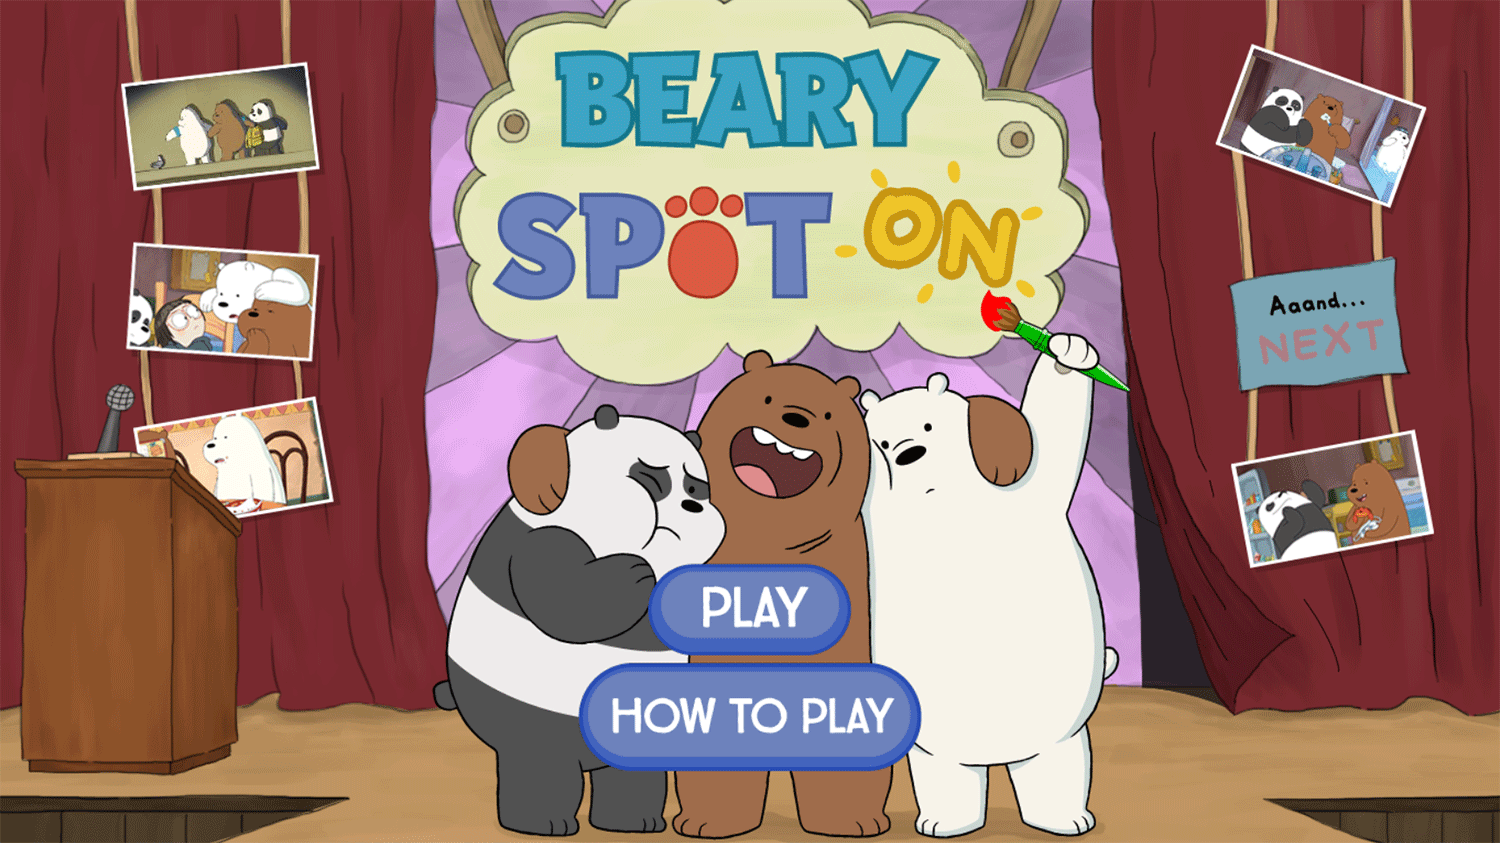 We Bare Bears Beary Spot On Welcome Screen Screenshot.